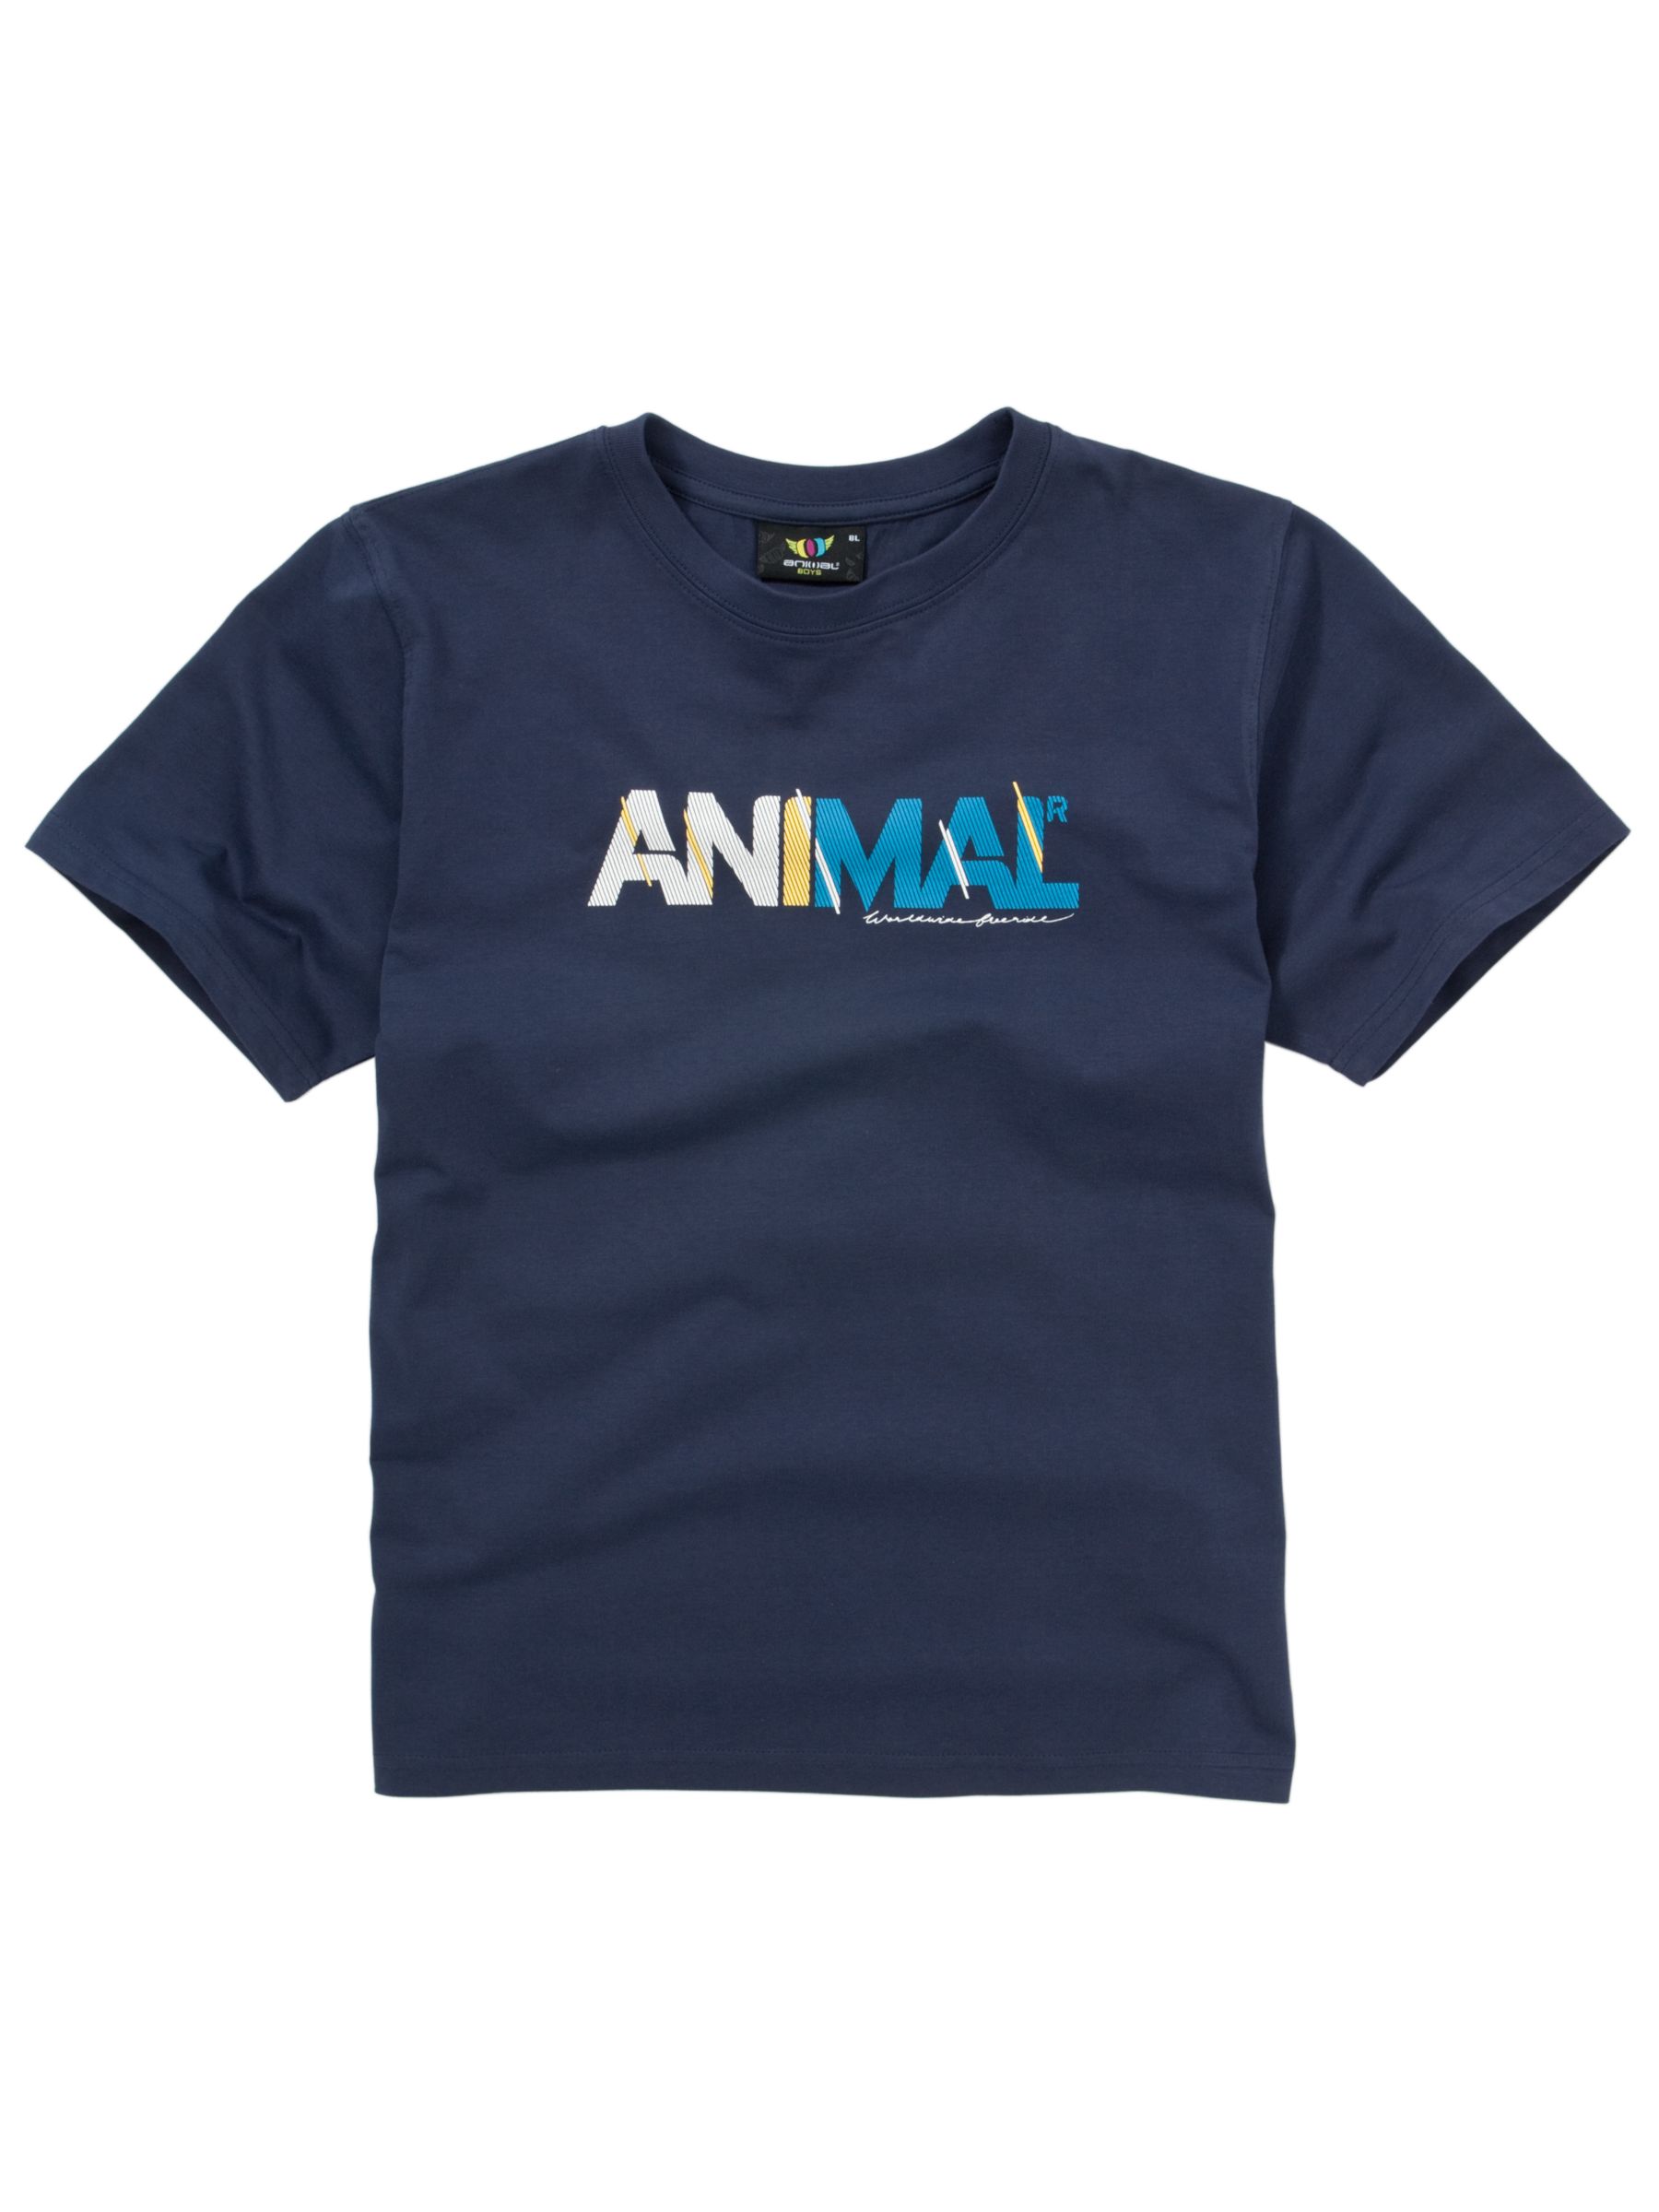 Animal Short Sleeve T-Shirt, Navy